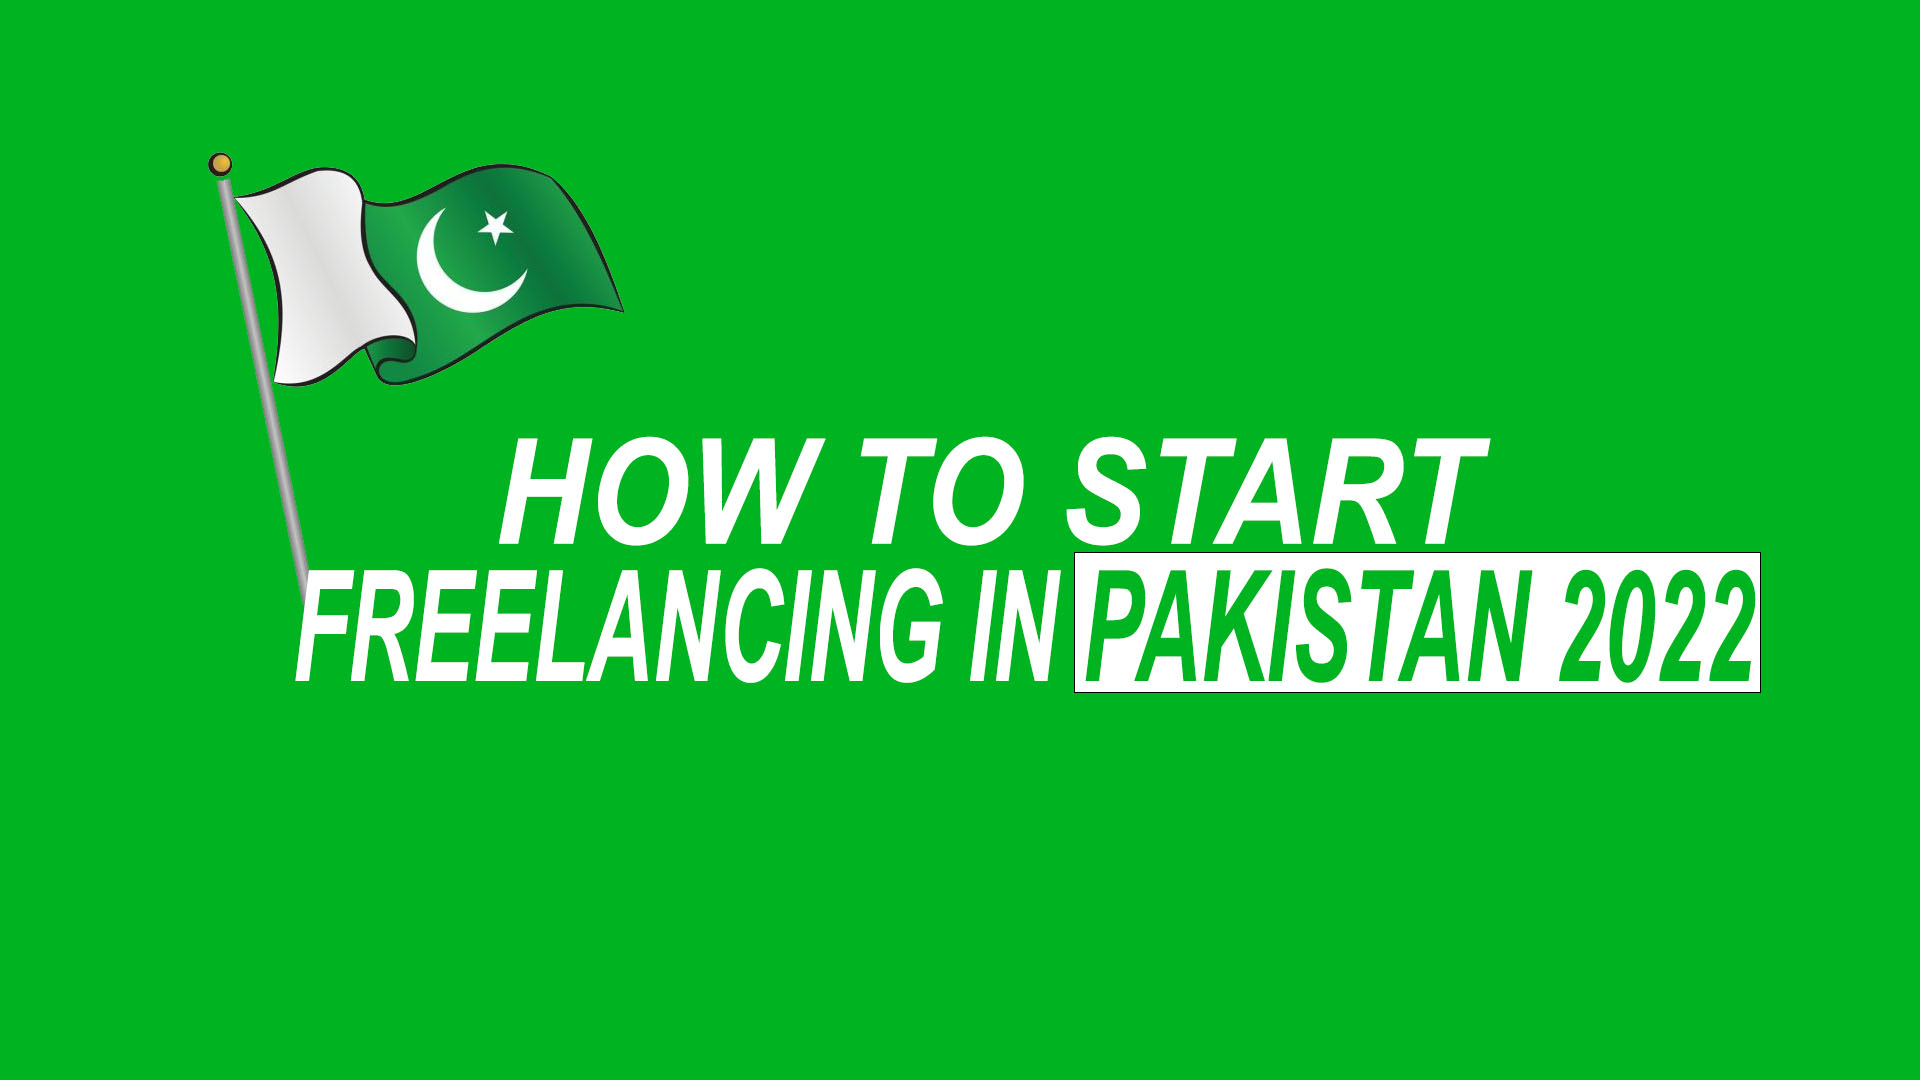 How To Start Freelancing in Pakistan 2022